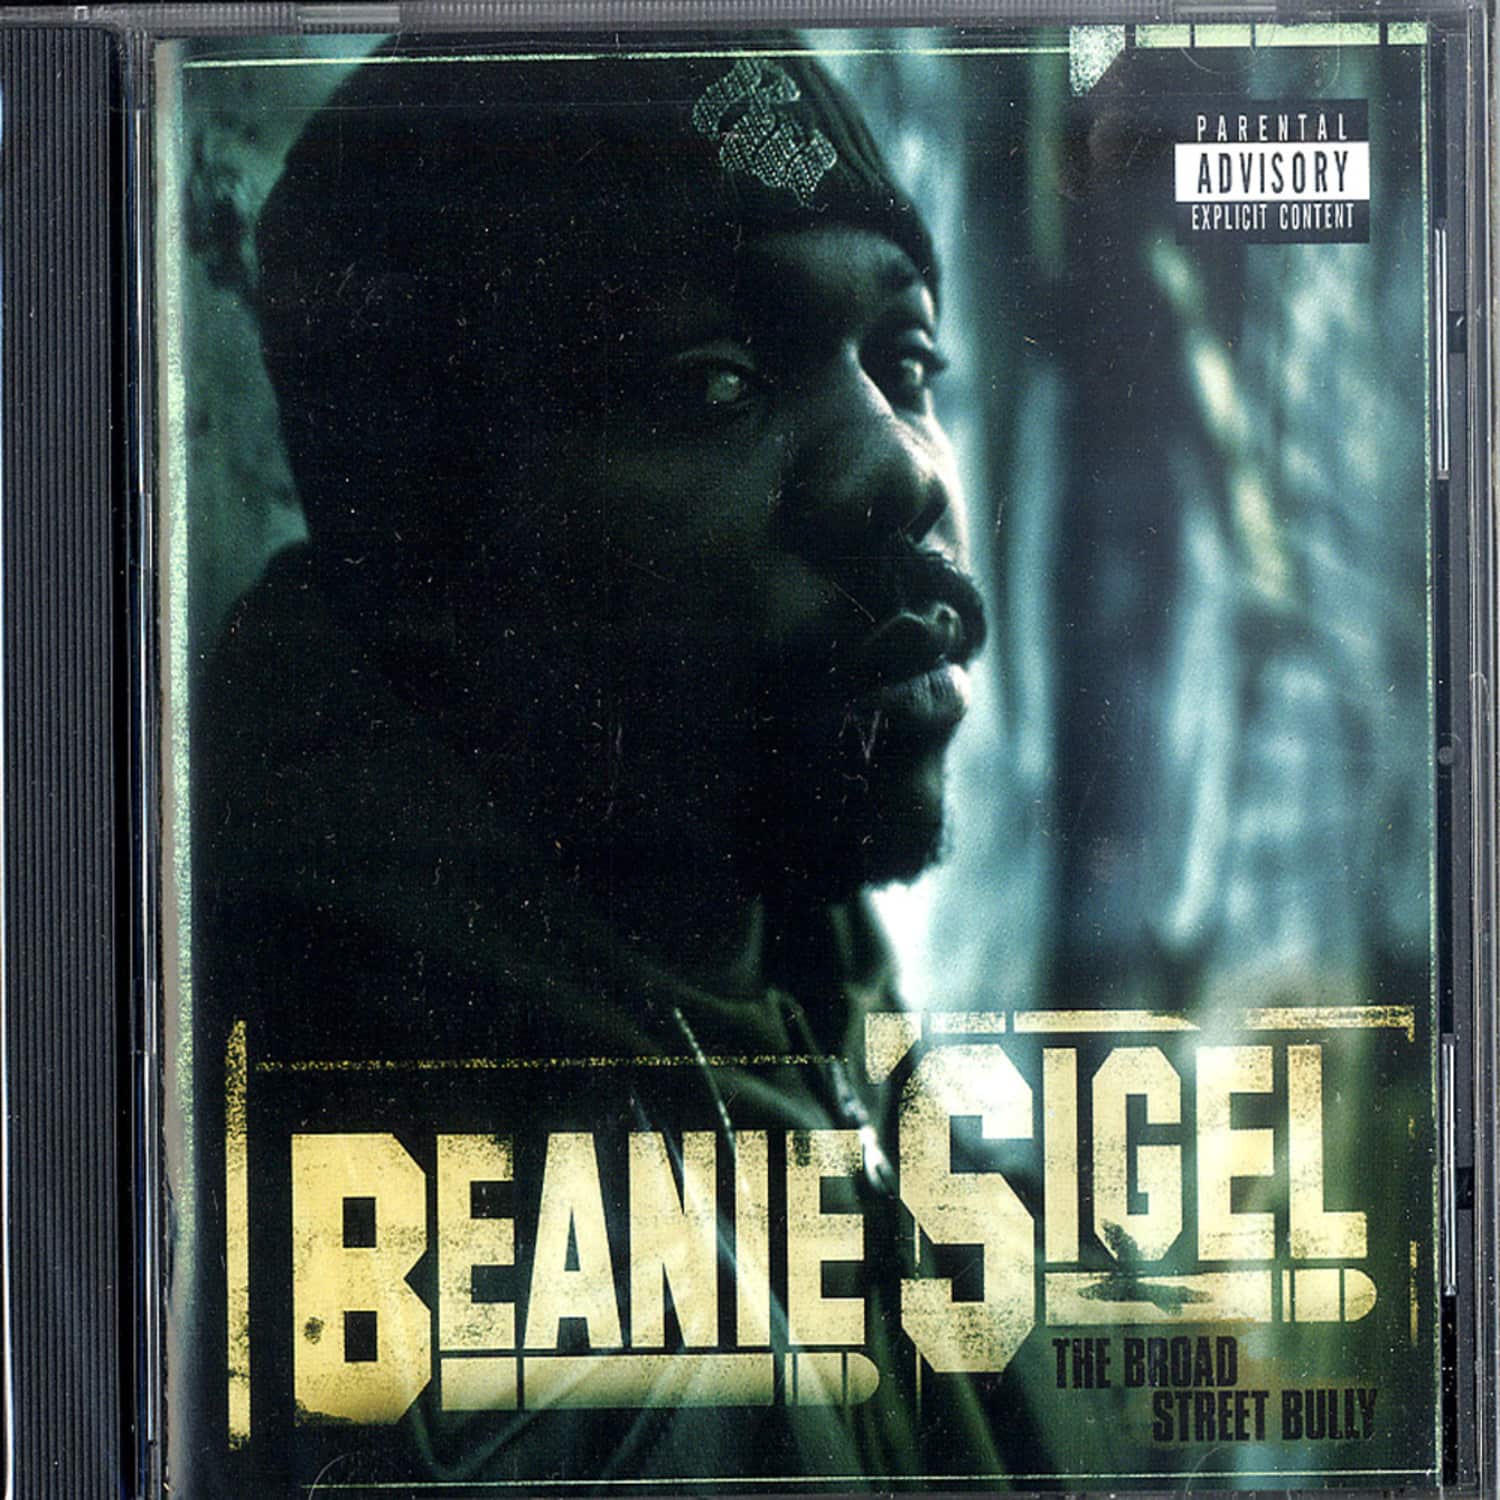 Beanie Siegel - THE BROAD STREET BULLY 